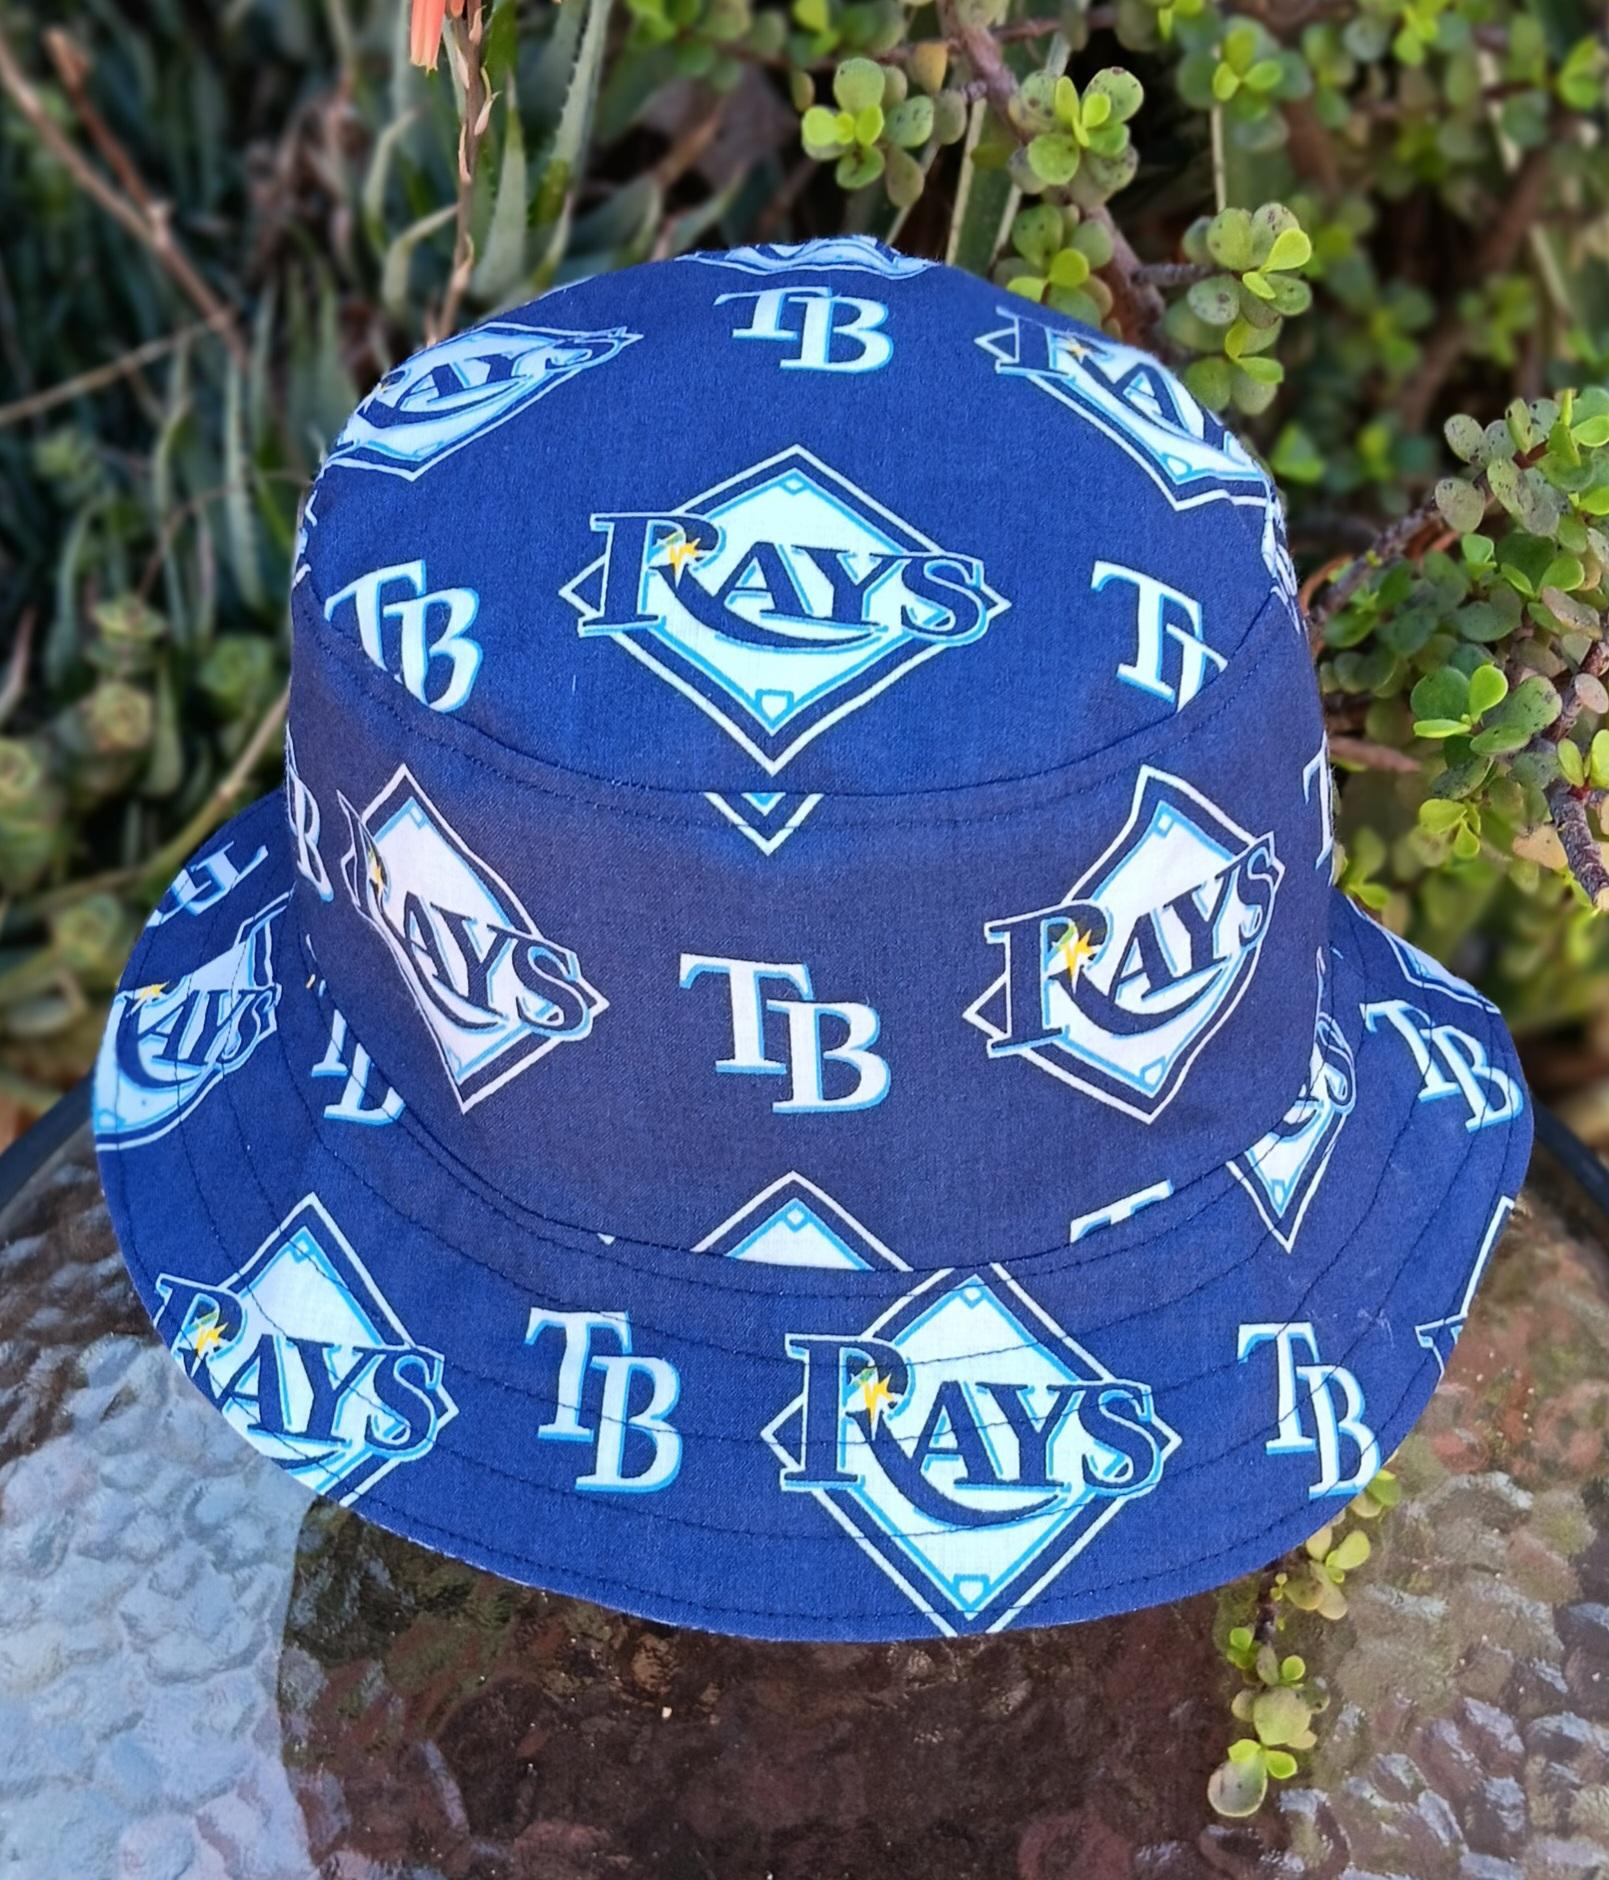 Tampa Bay Rays / Lightning Bucket Hat, Reversible, Unisex Sizes S-XXL, Cotton, Handmade, summer fishing hat, ponytail sun hat, floppy hat